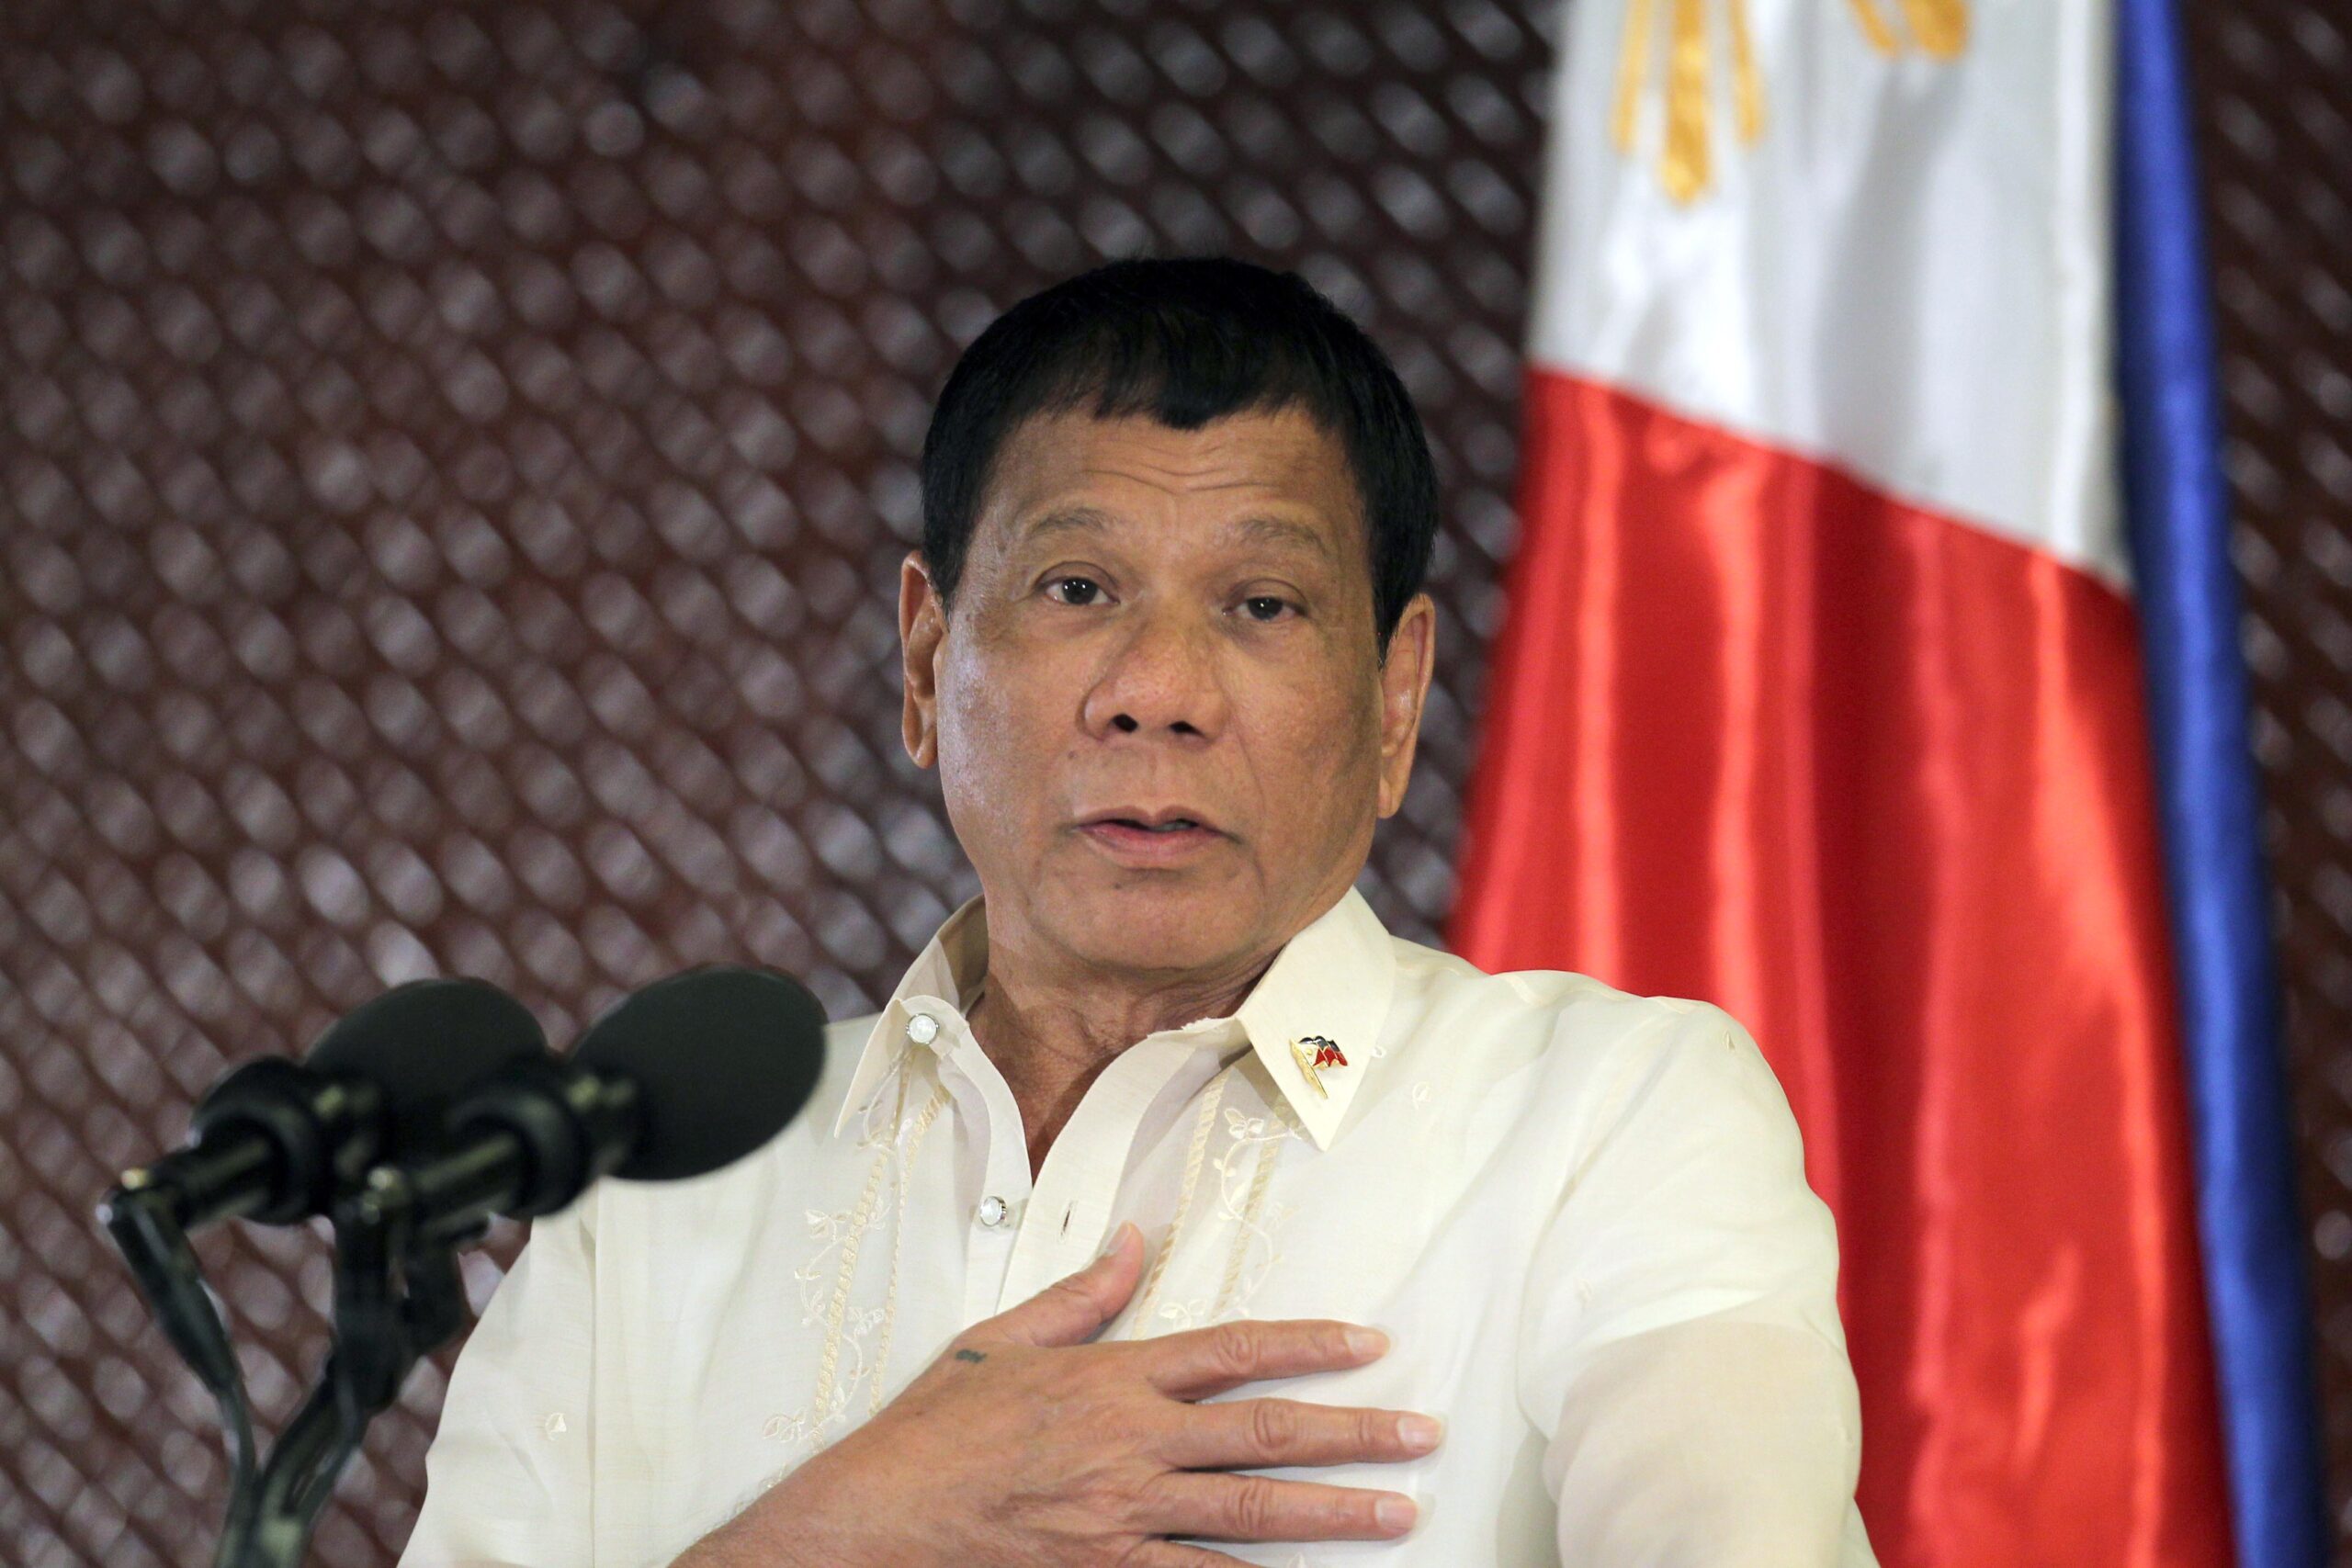 Opposition lawmakers hit ‘creeping authoritarianism’ under Duterte